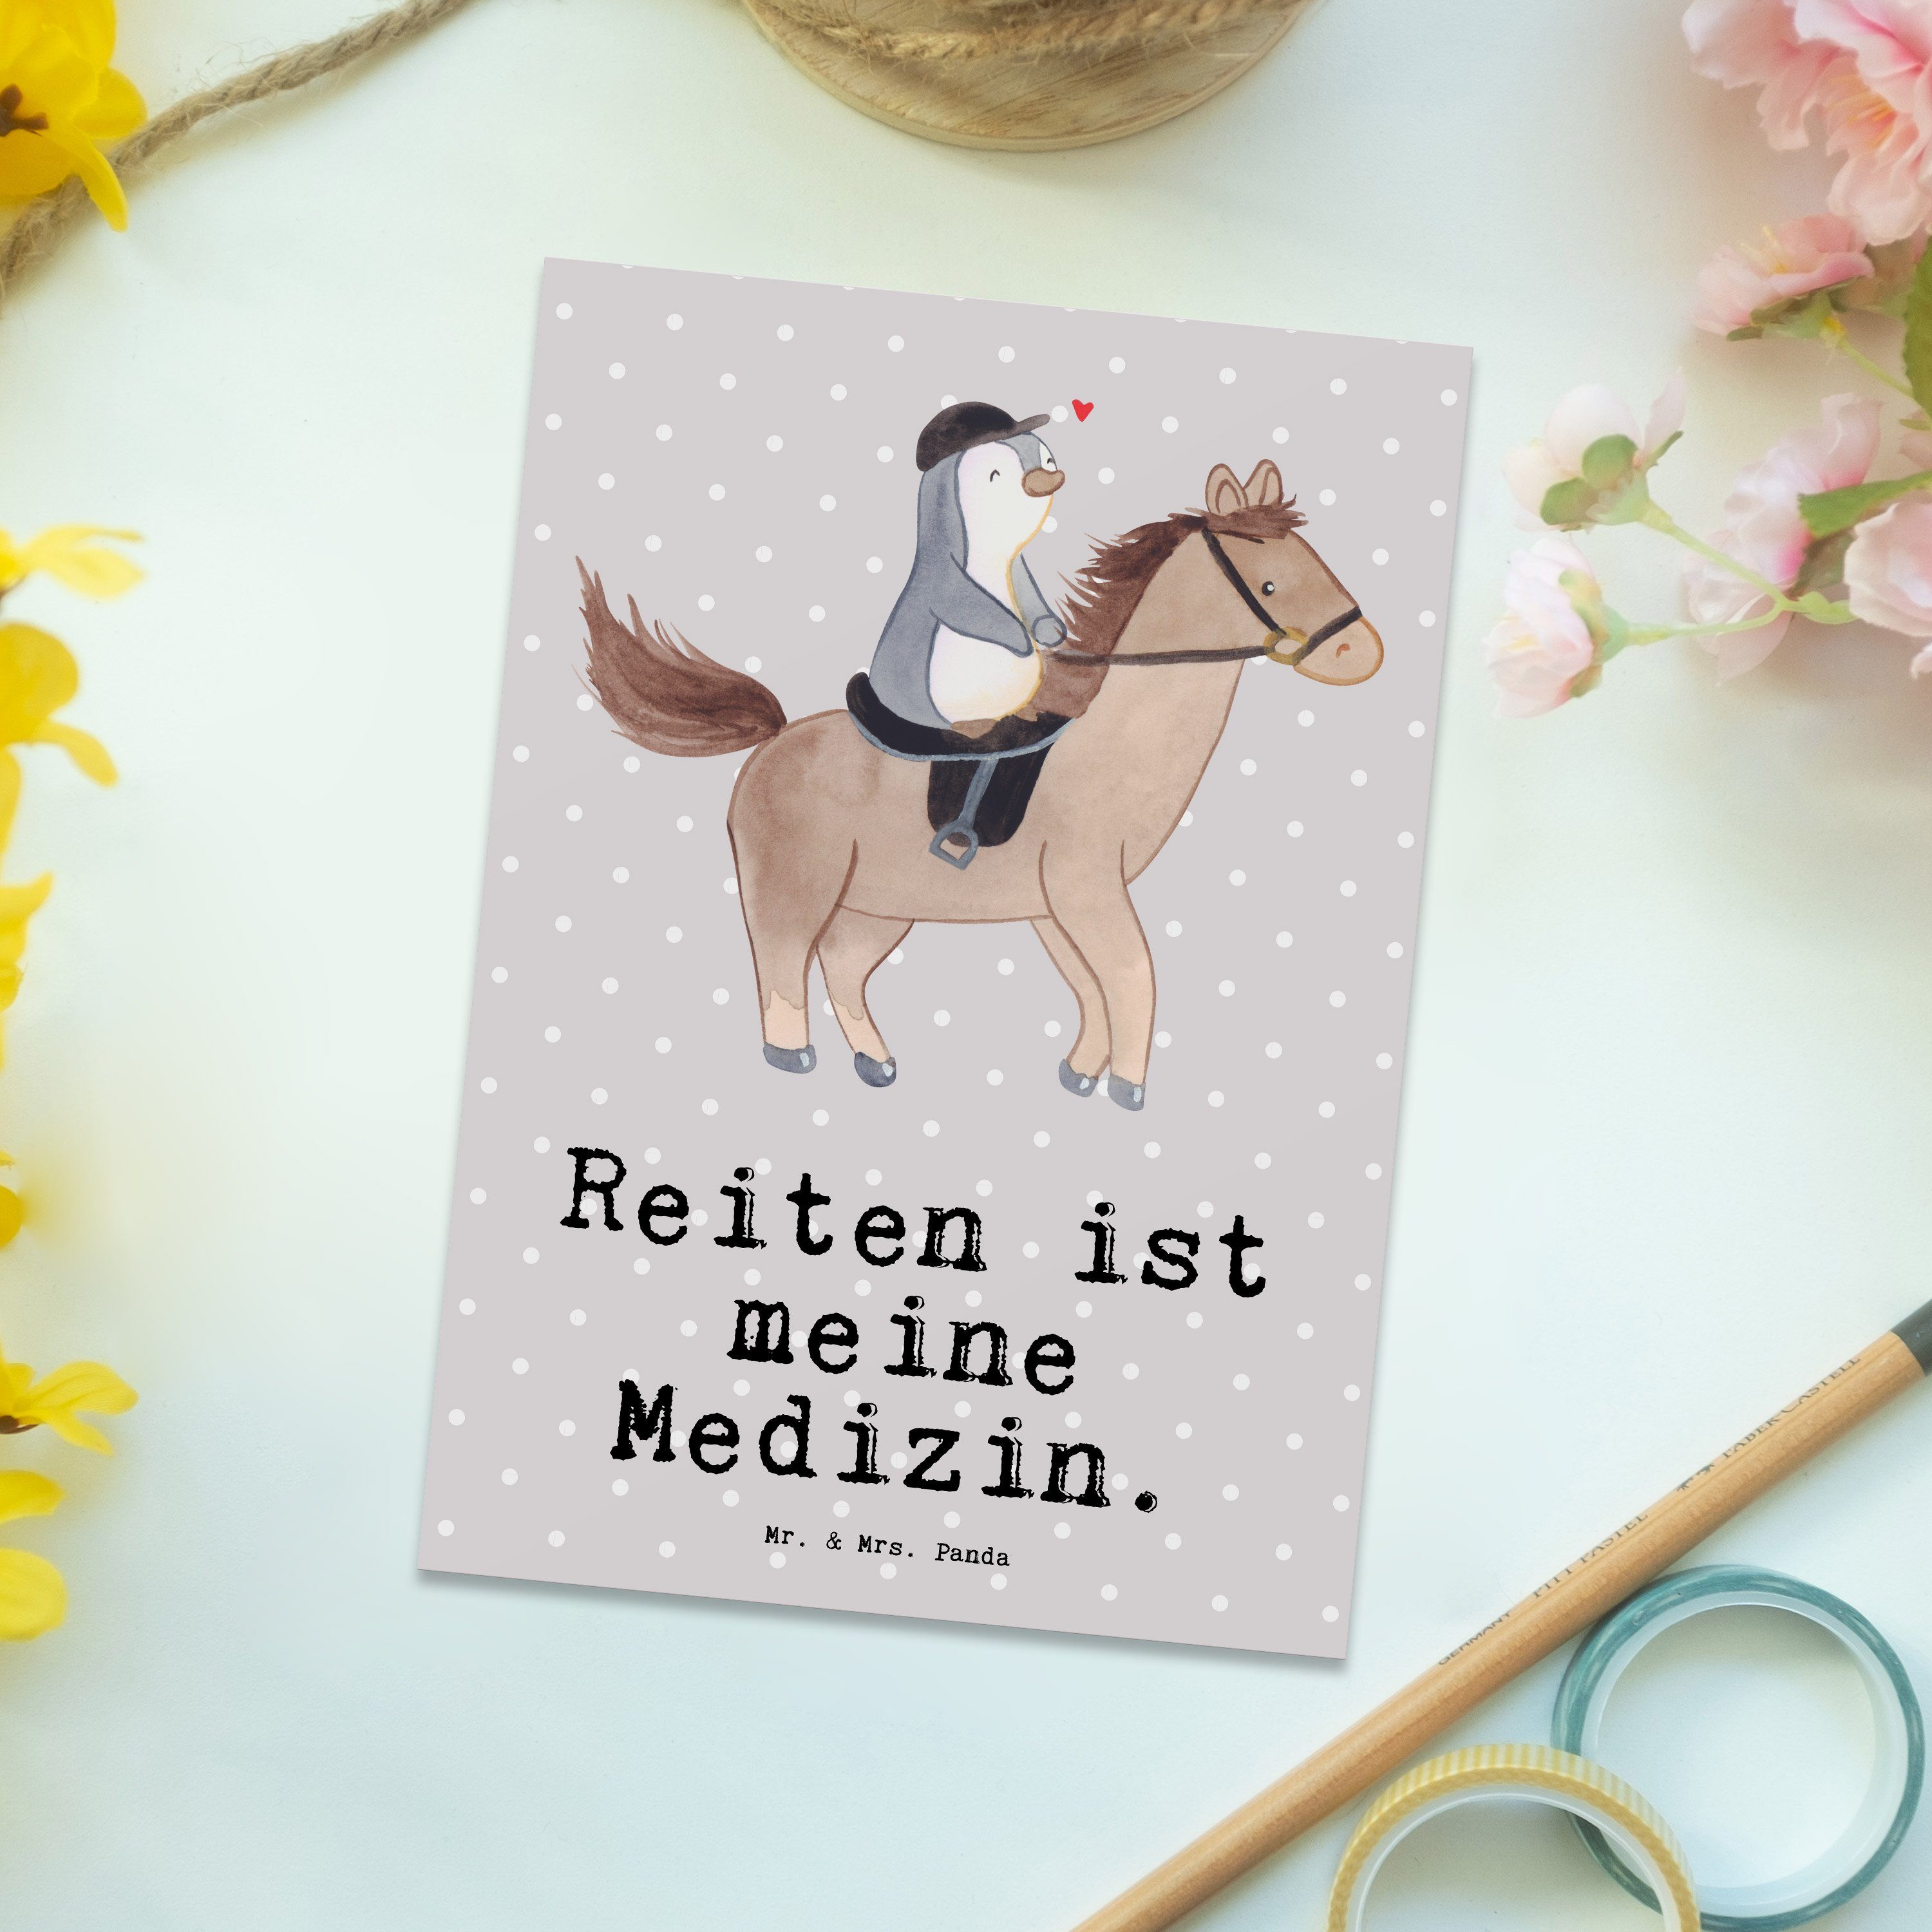 Mr. & Mrs. Panda Postkarte Pferd Reiten Medizin - Grau Pastell - Geschenk, Karte, Dankeschön, Pf